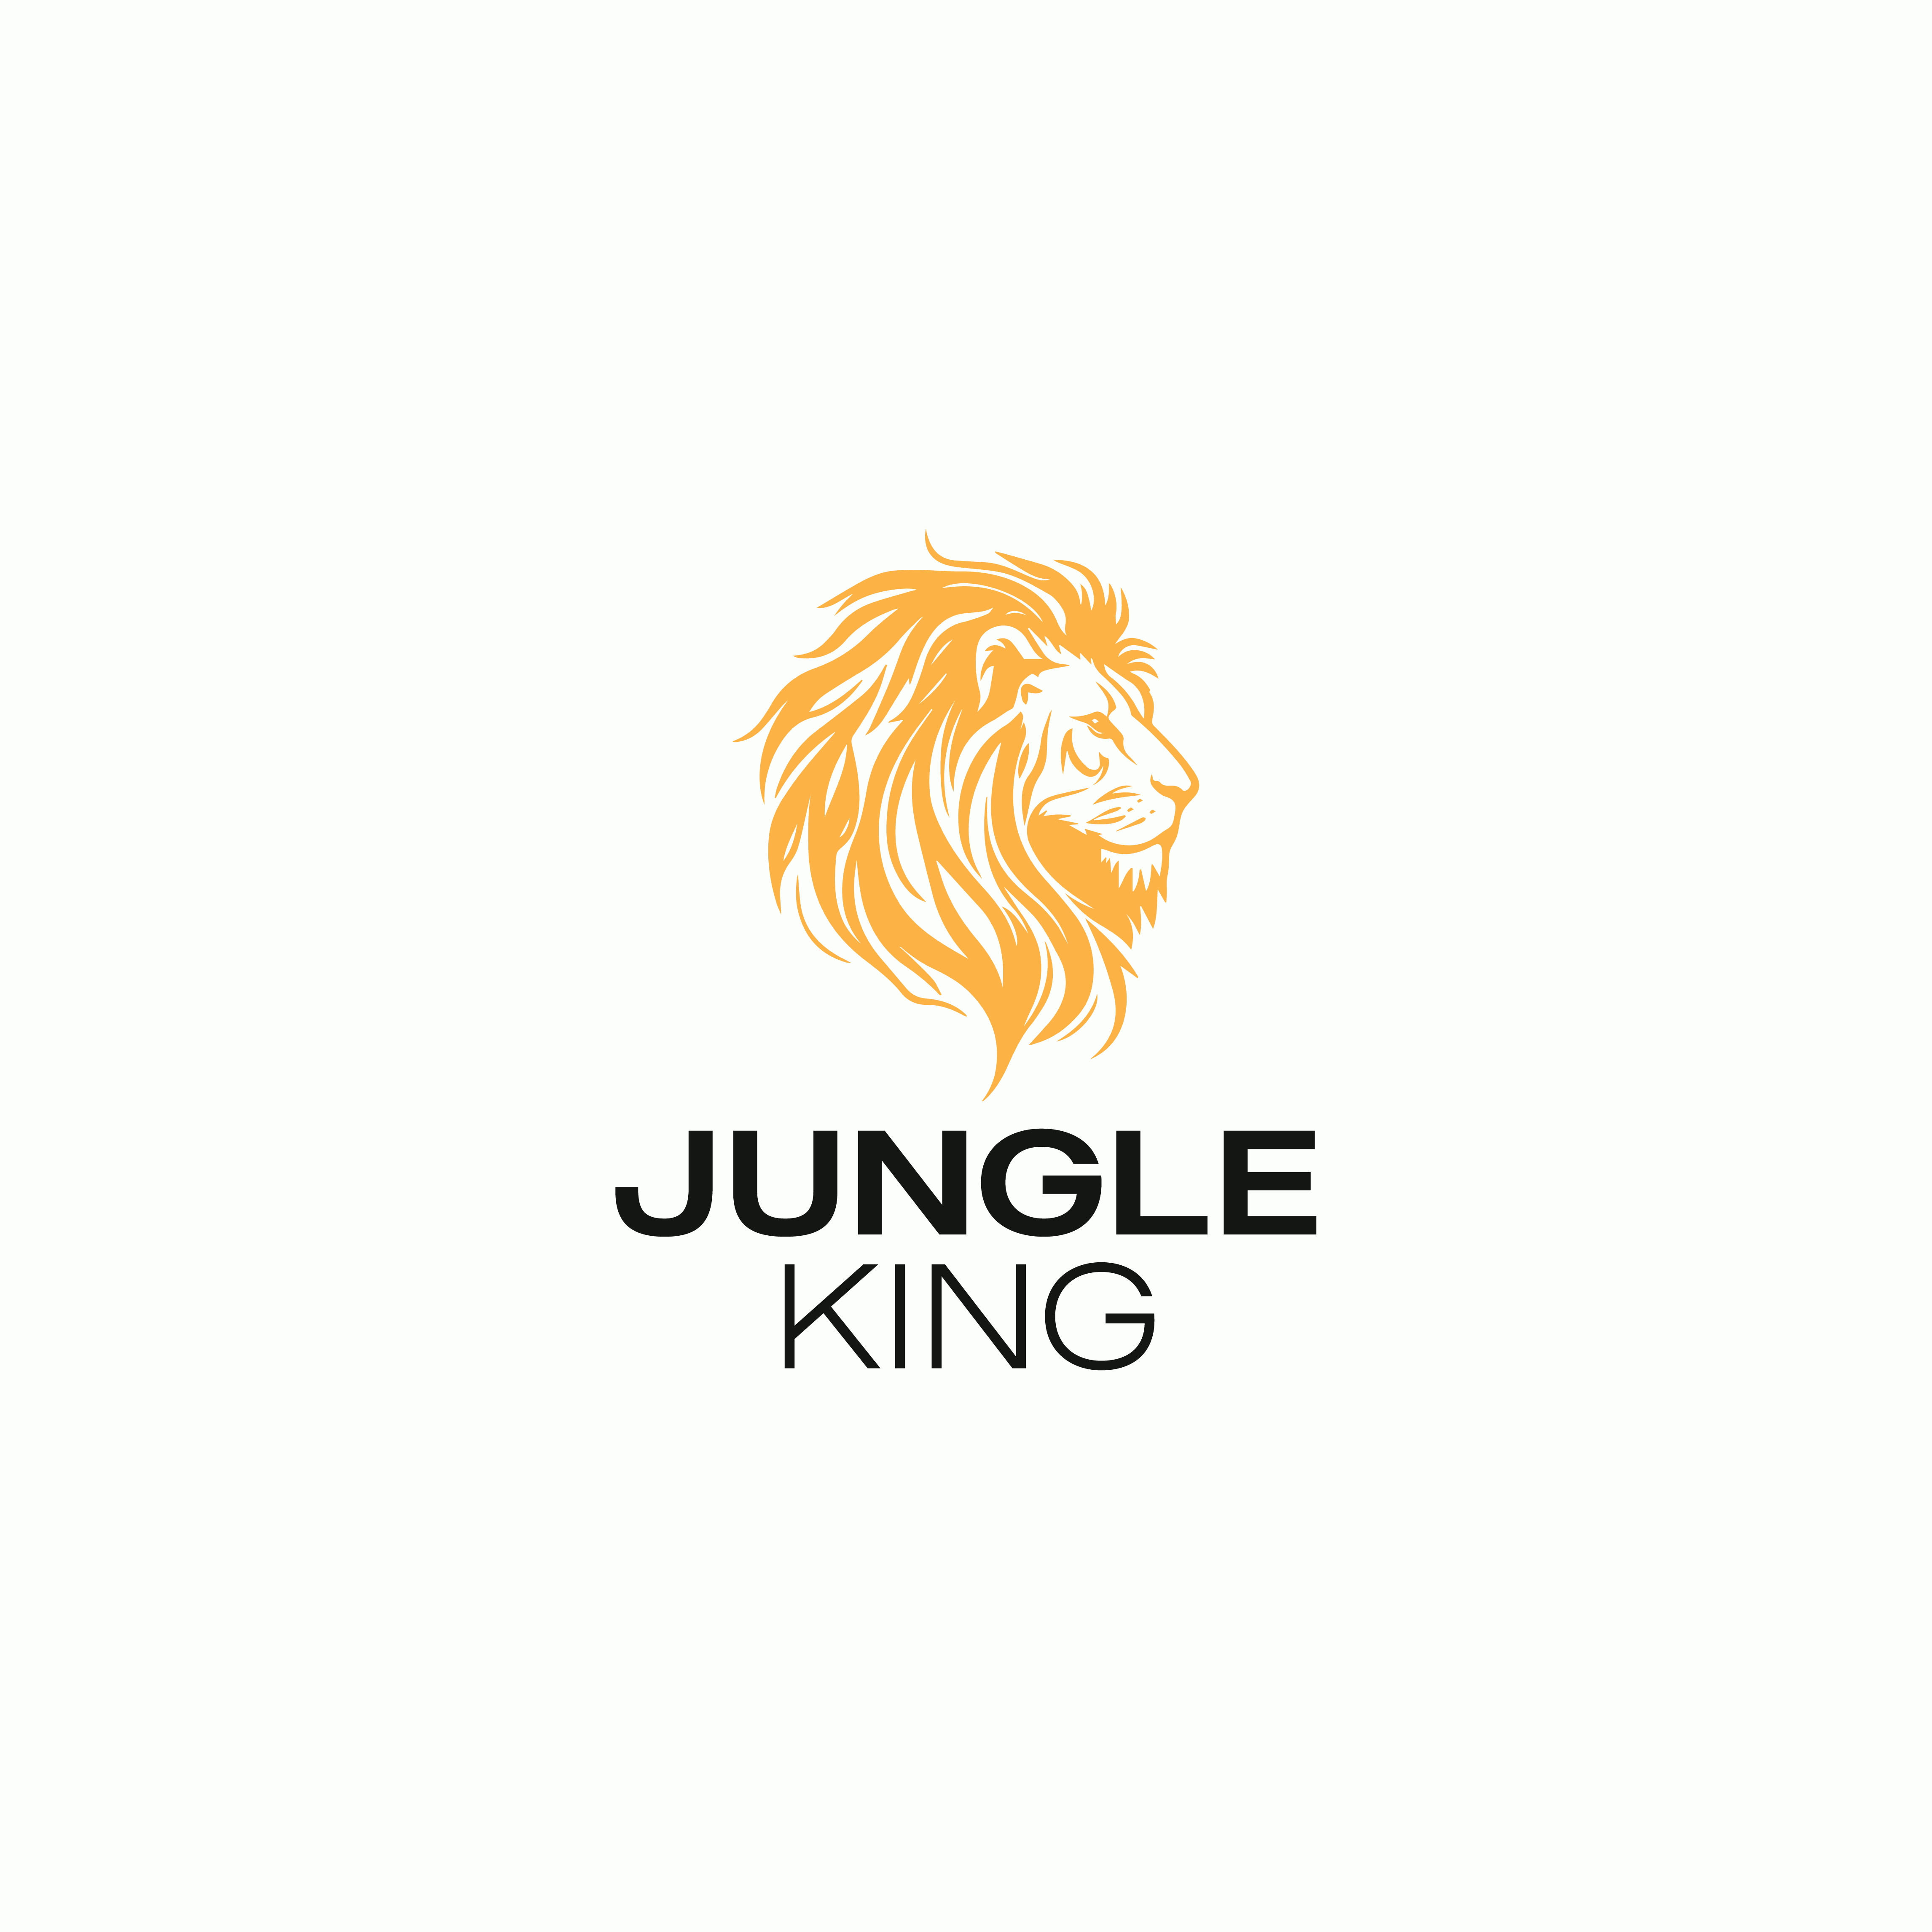 LION LOGO - JUNGLE KING preview image.